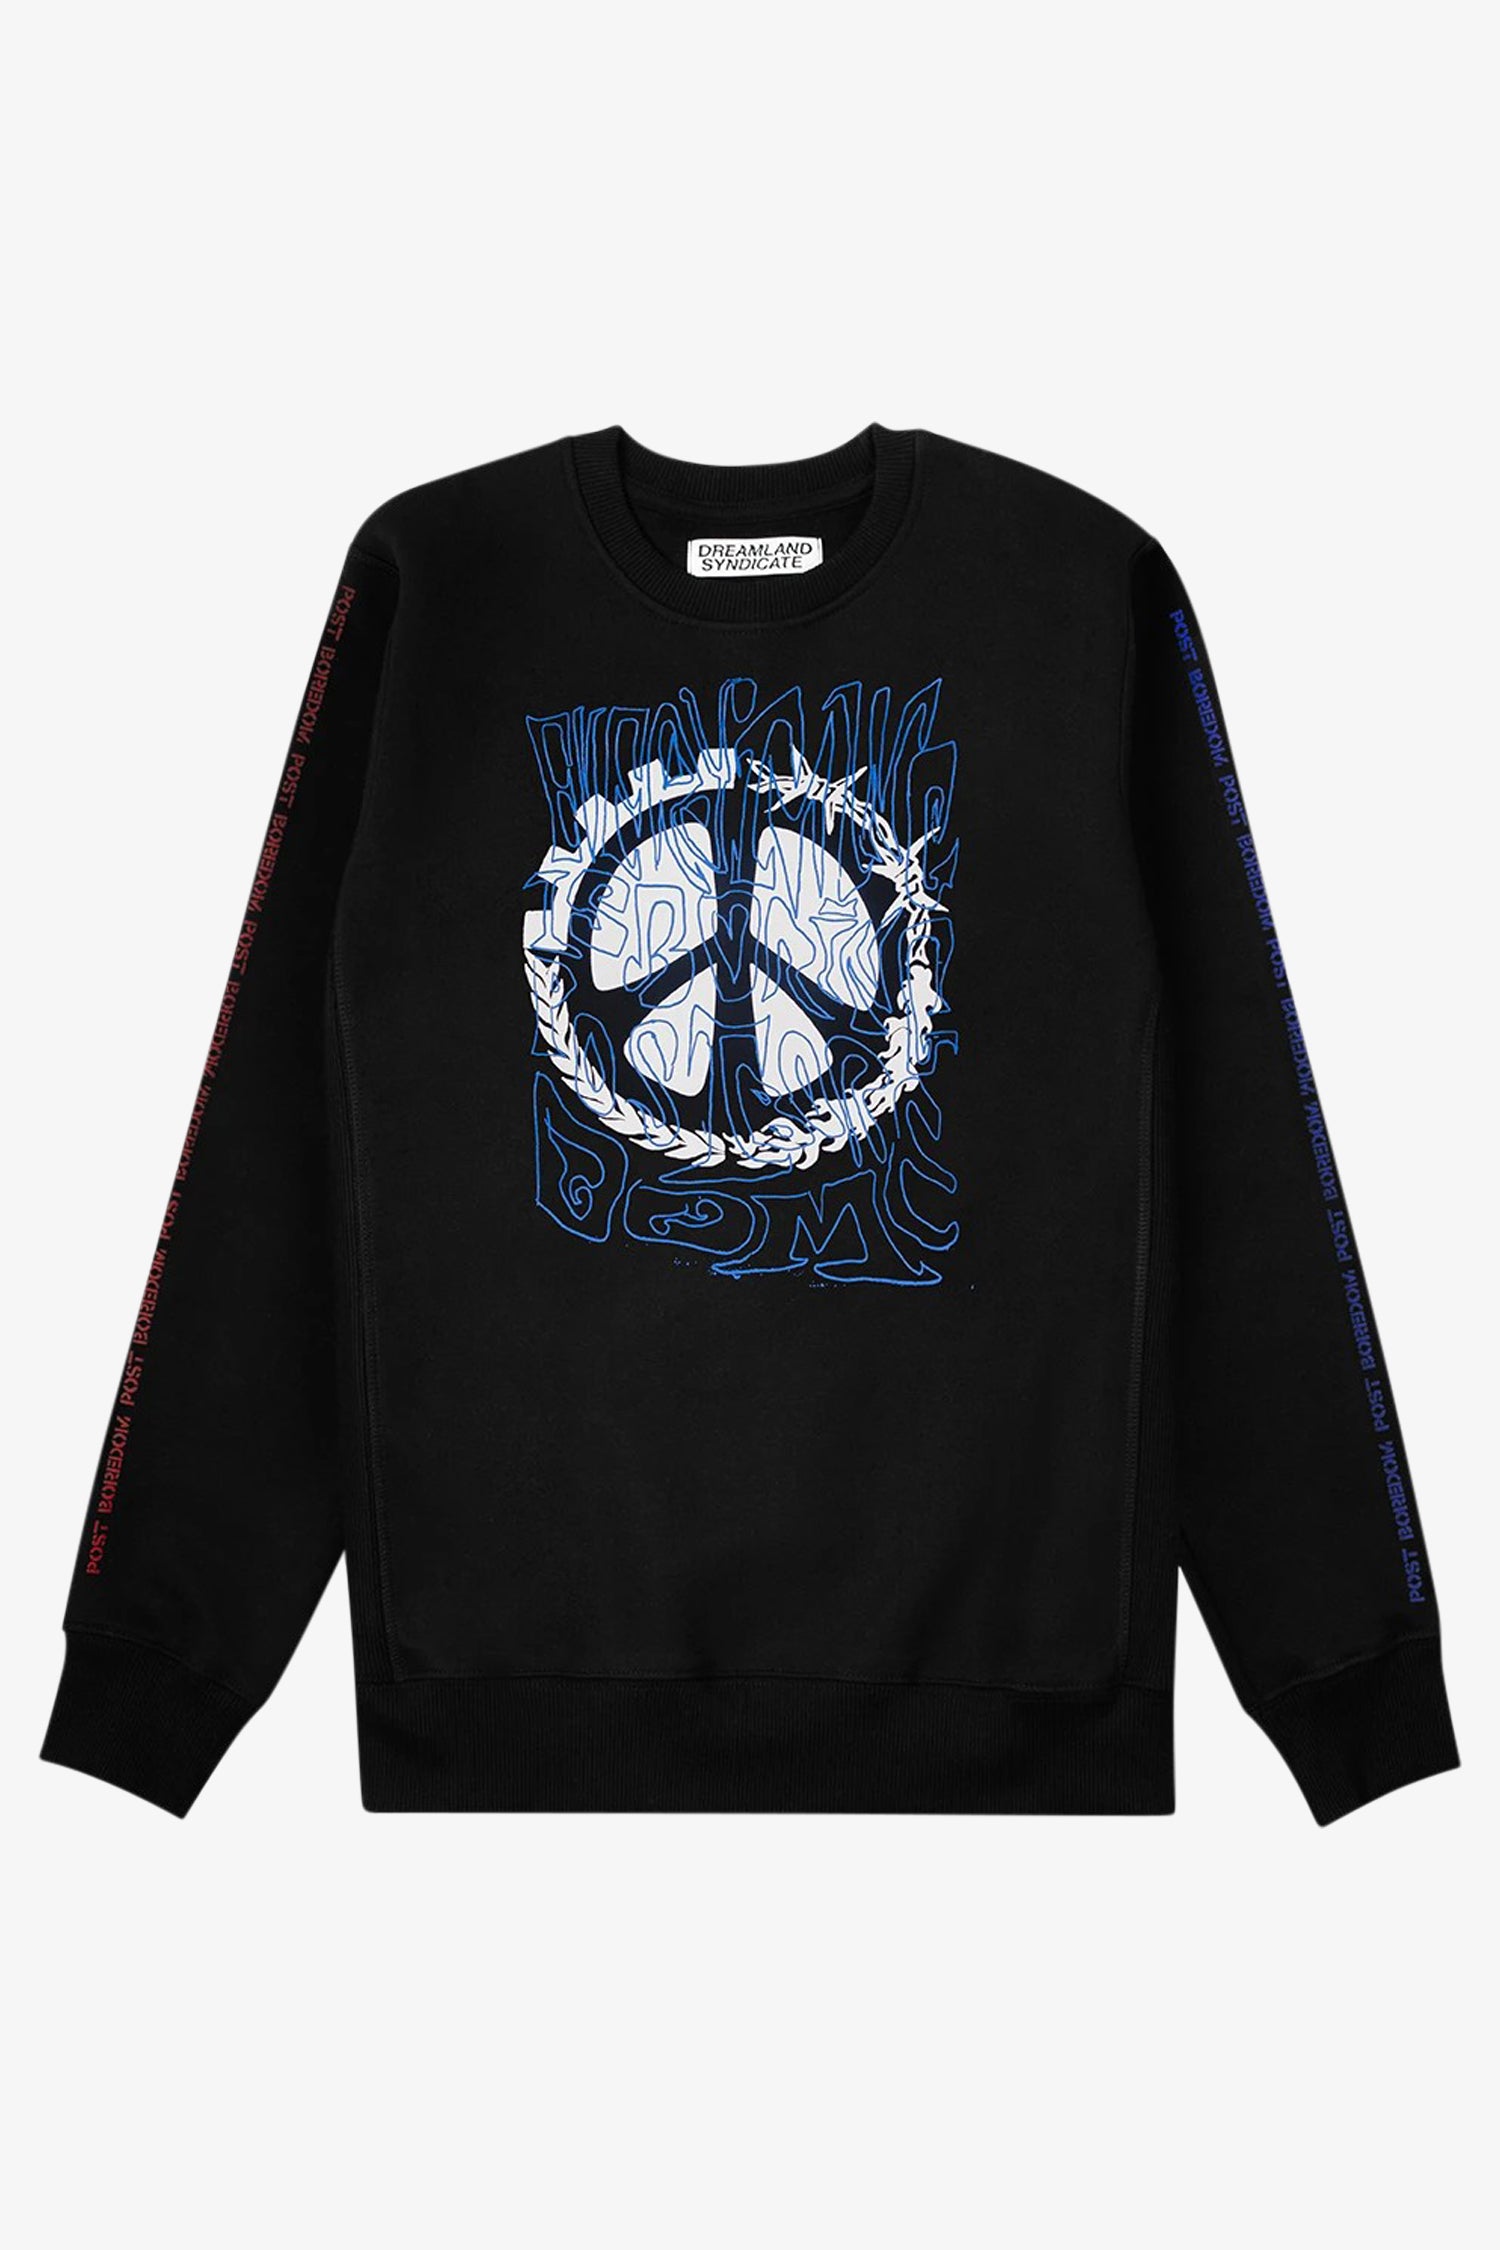 Selectshop FRAME - DREAMLAND SYNDICATE Peace Sweatshirt Sweatshirts Dubai